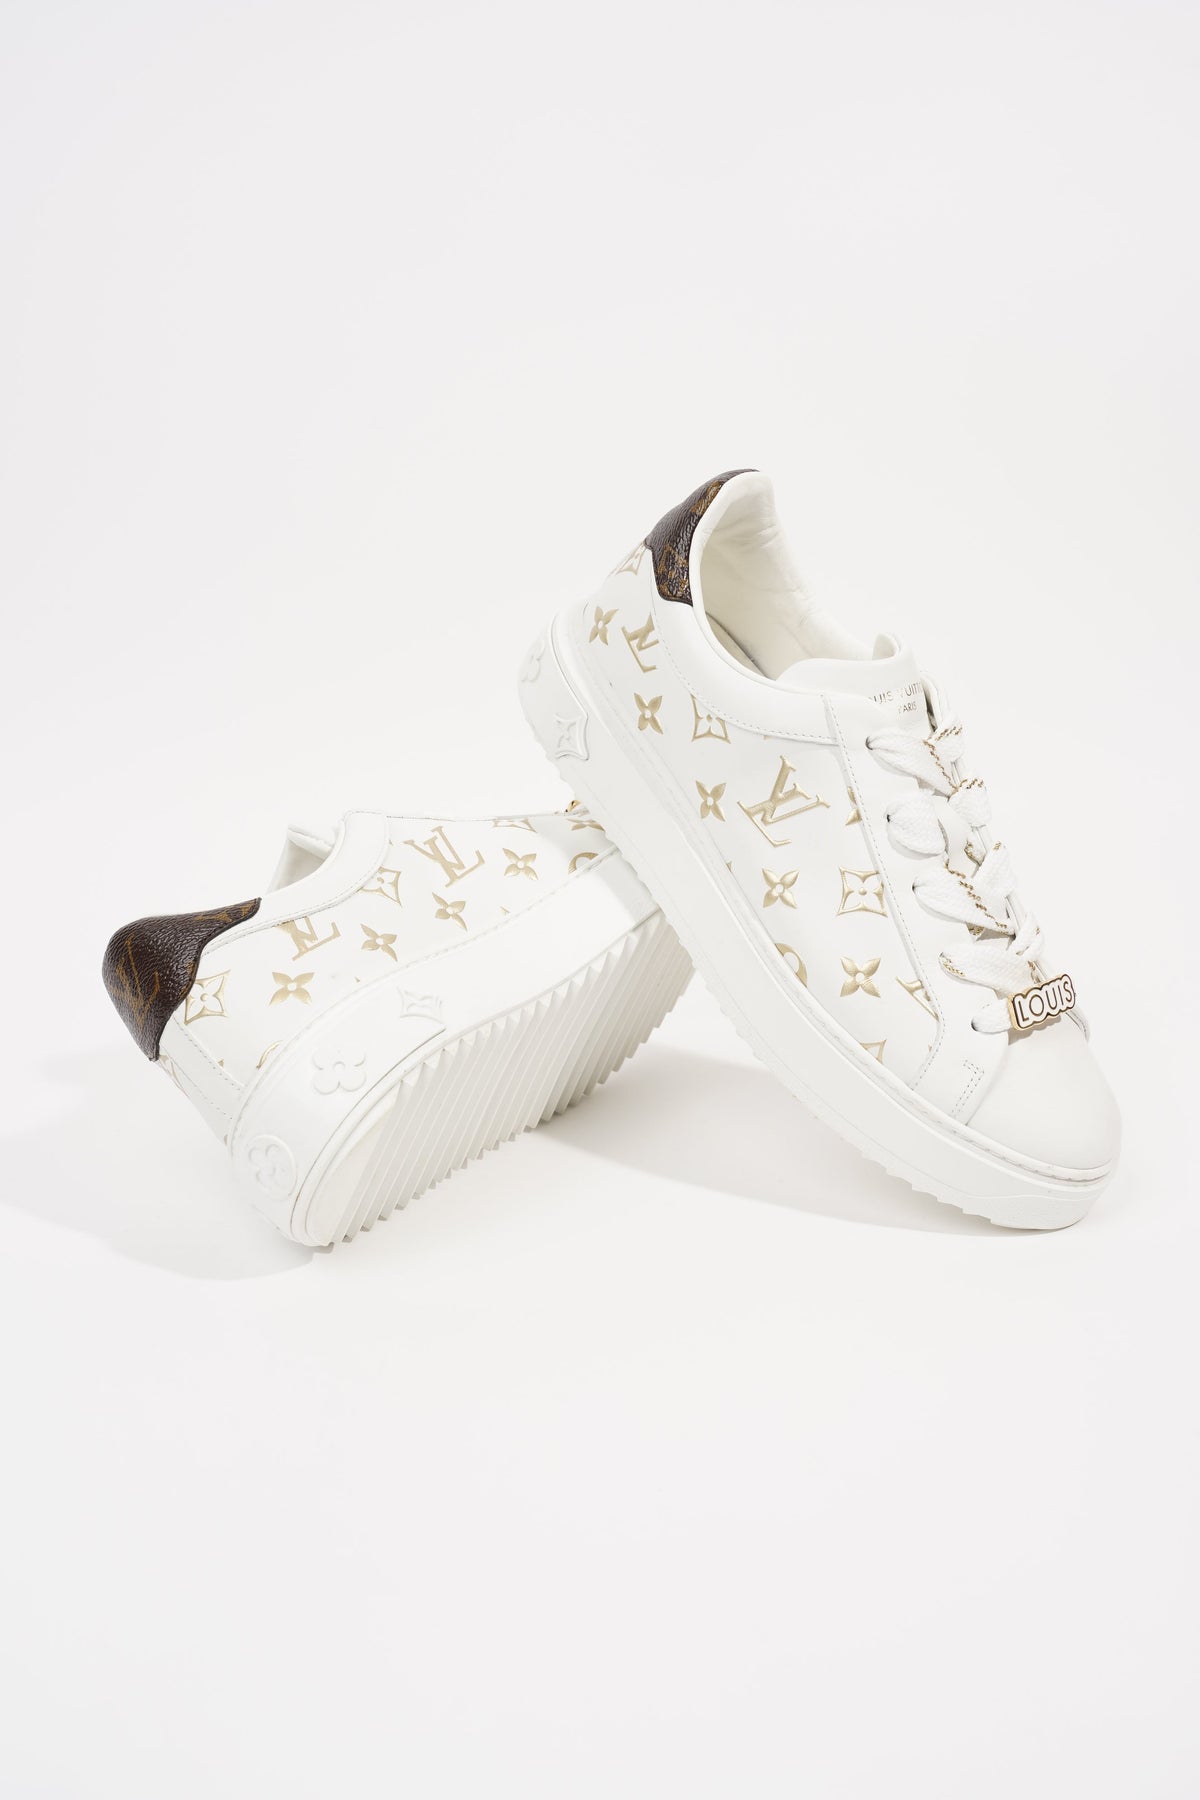 Louis Vuitton Time Out Sneaker, White, 40.5